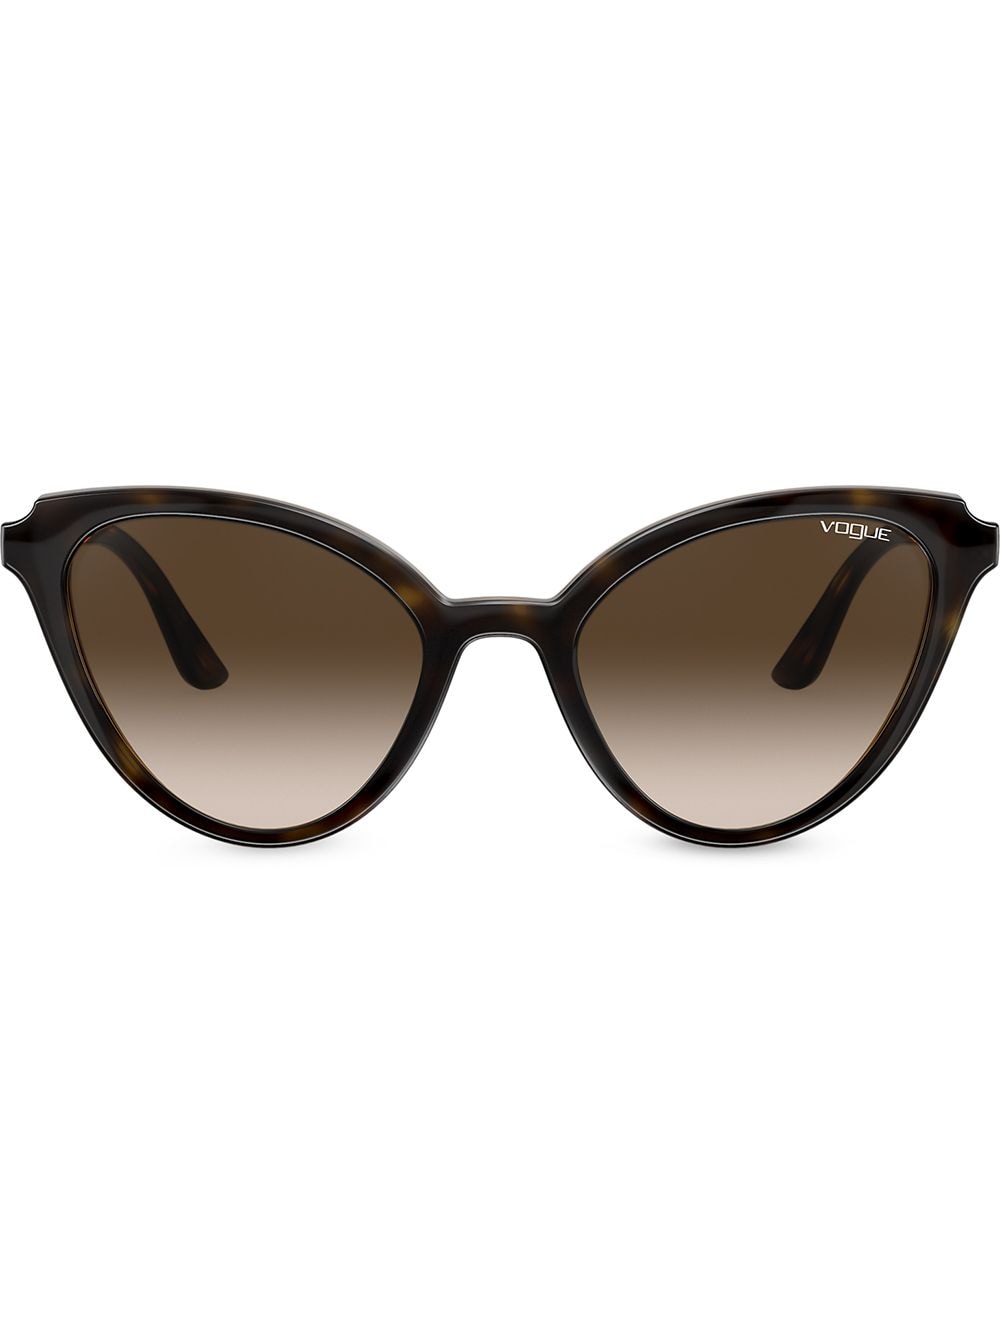 Vogue Eyewear Mod Cut Cat-eye Sunglasses In Brown